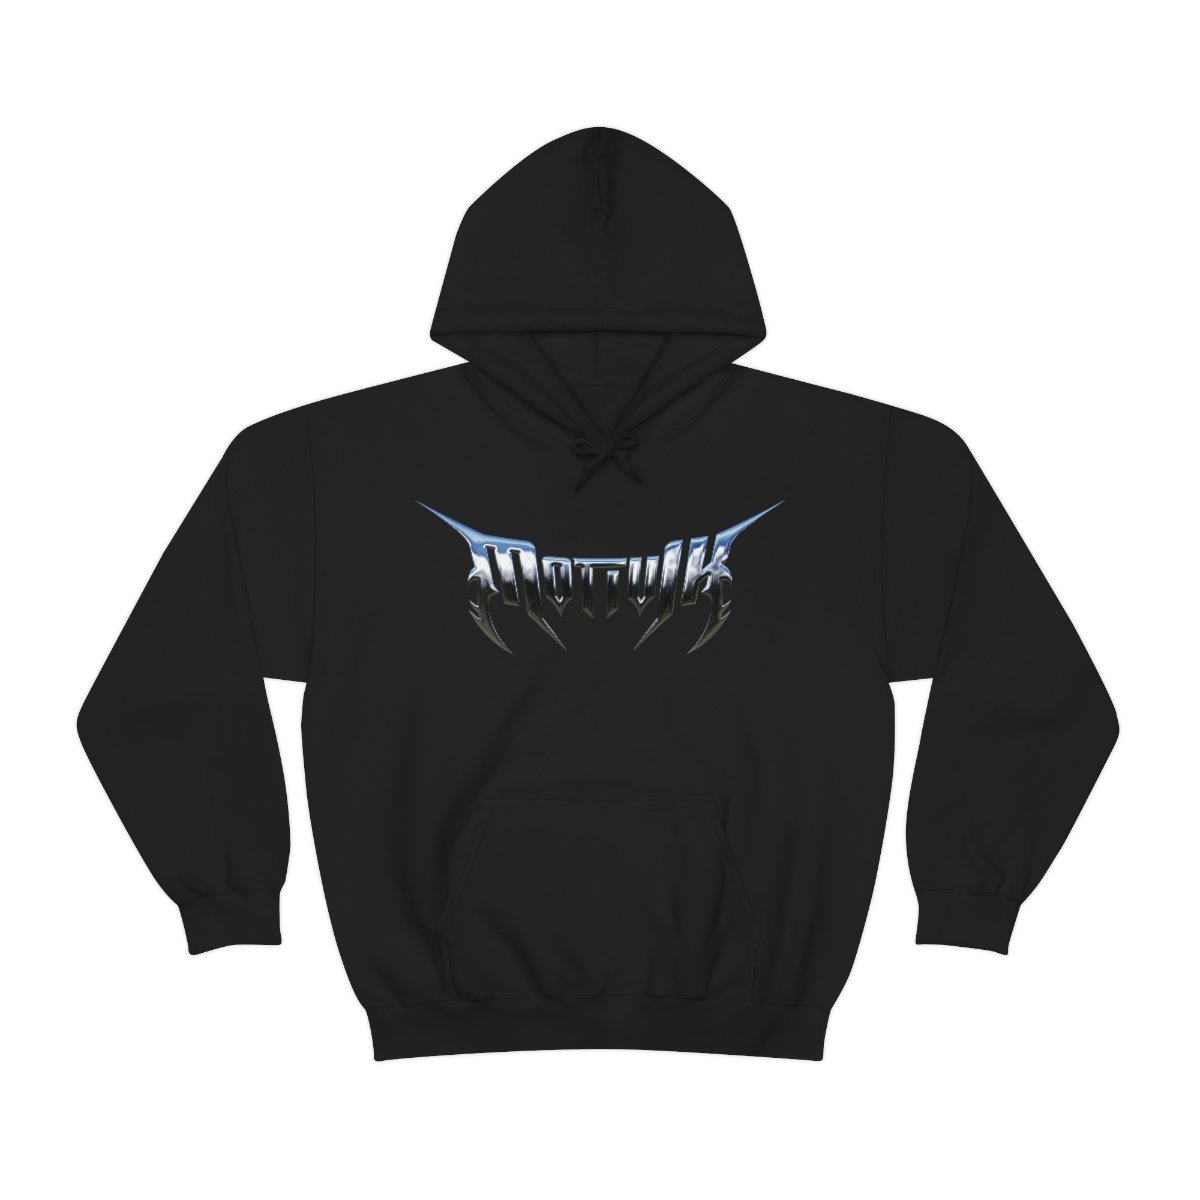 Motivik Chrome Logo Pullover Hooded Sweatshirt